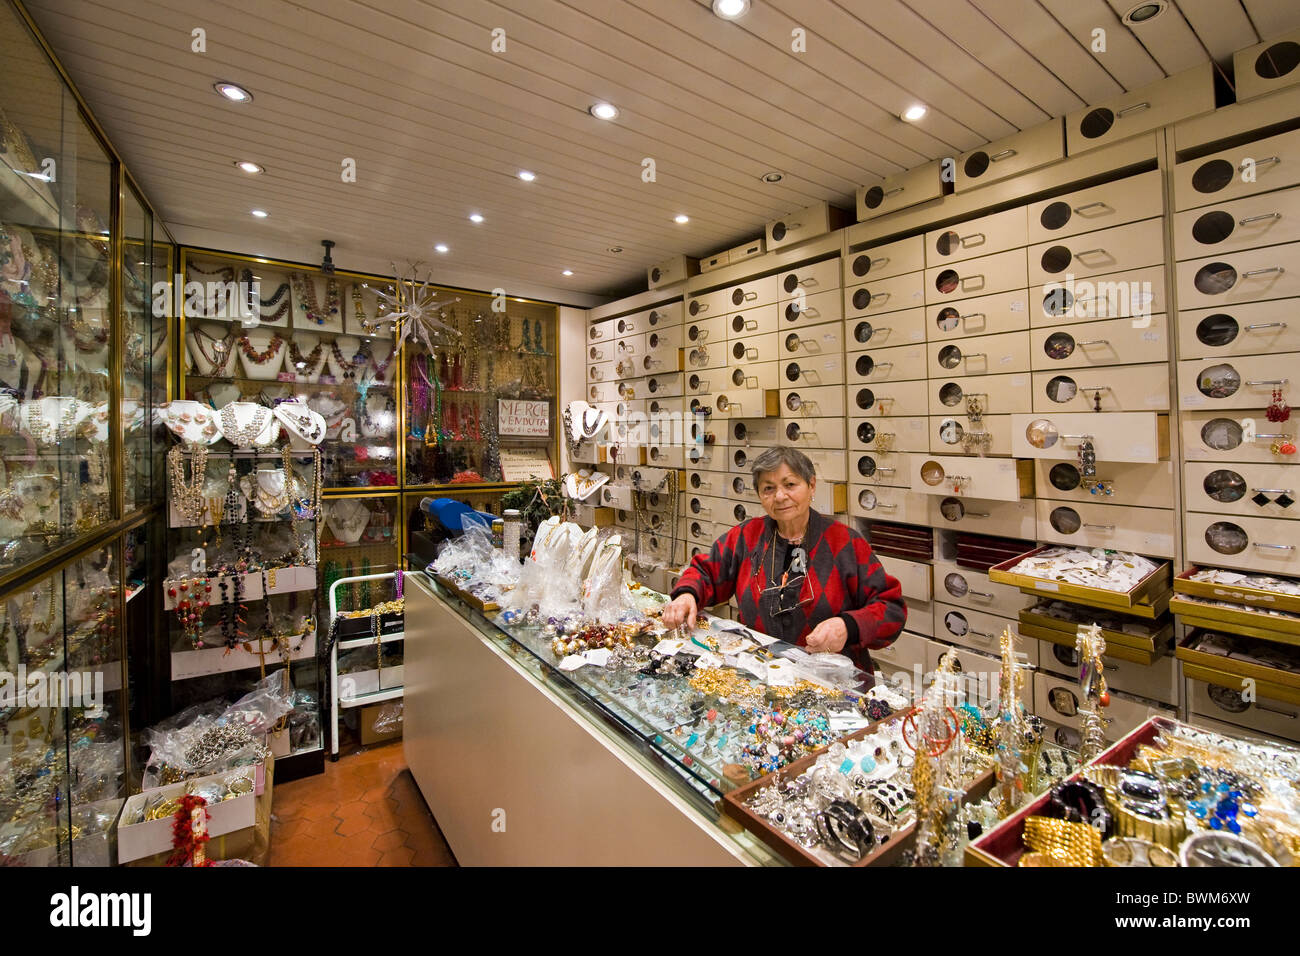 La perla d'oriente shop, Emilia Romagna, Italy Stock Photo Alamy